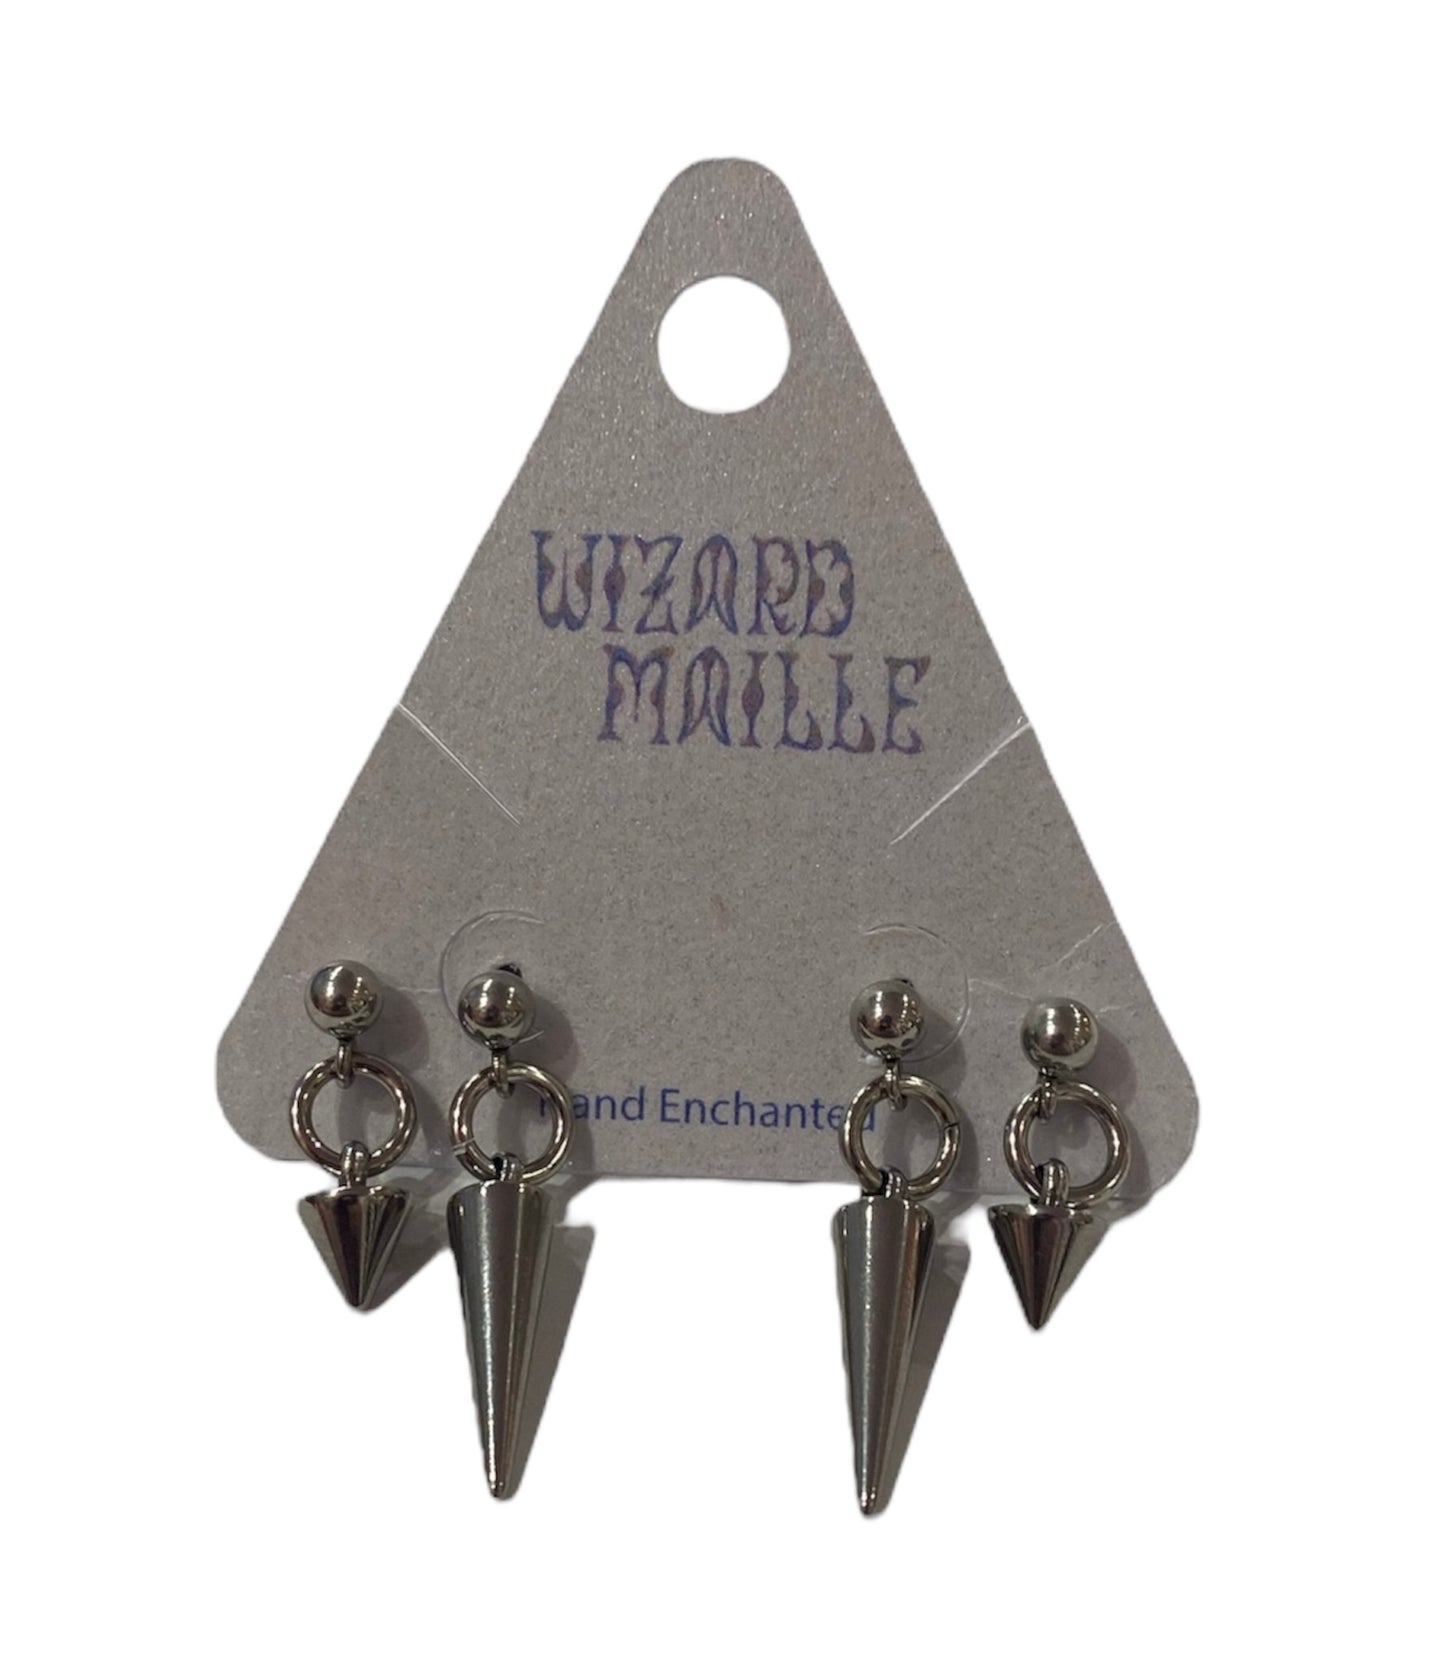 Earrings by Wizard Maille